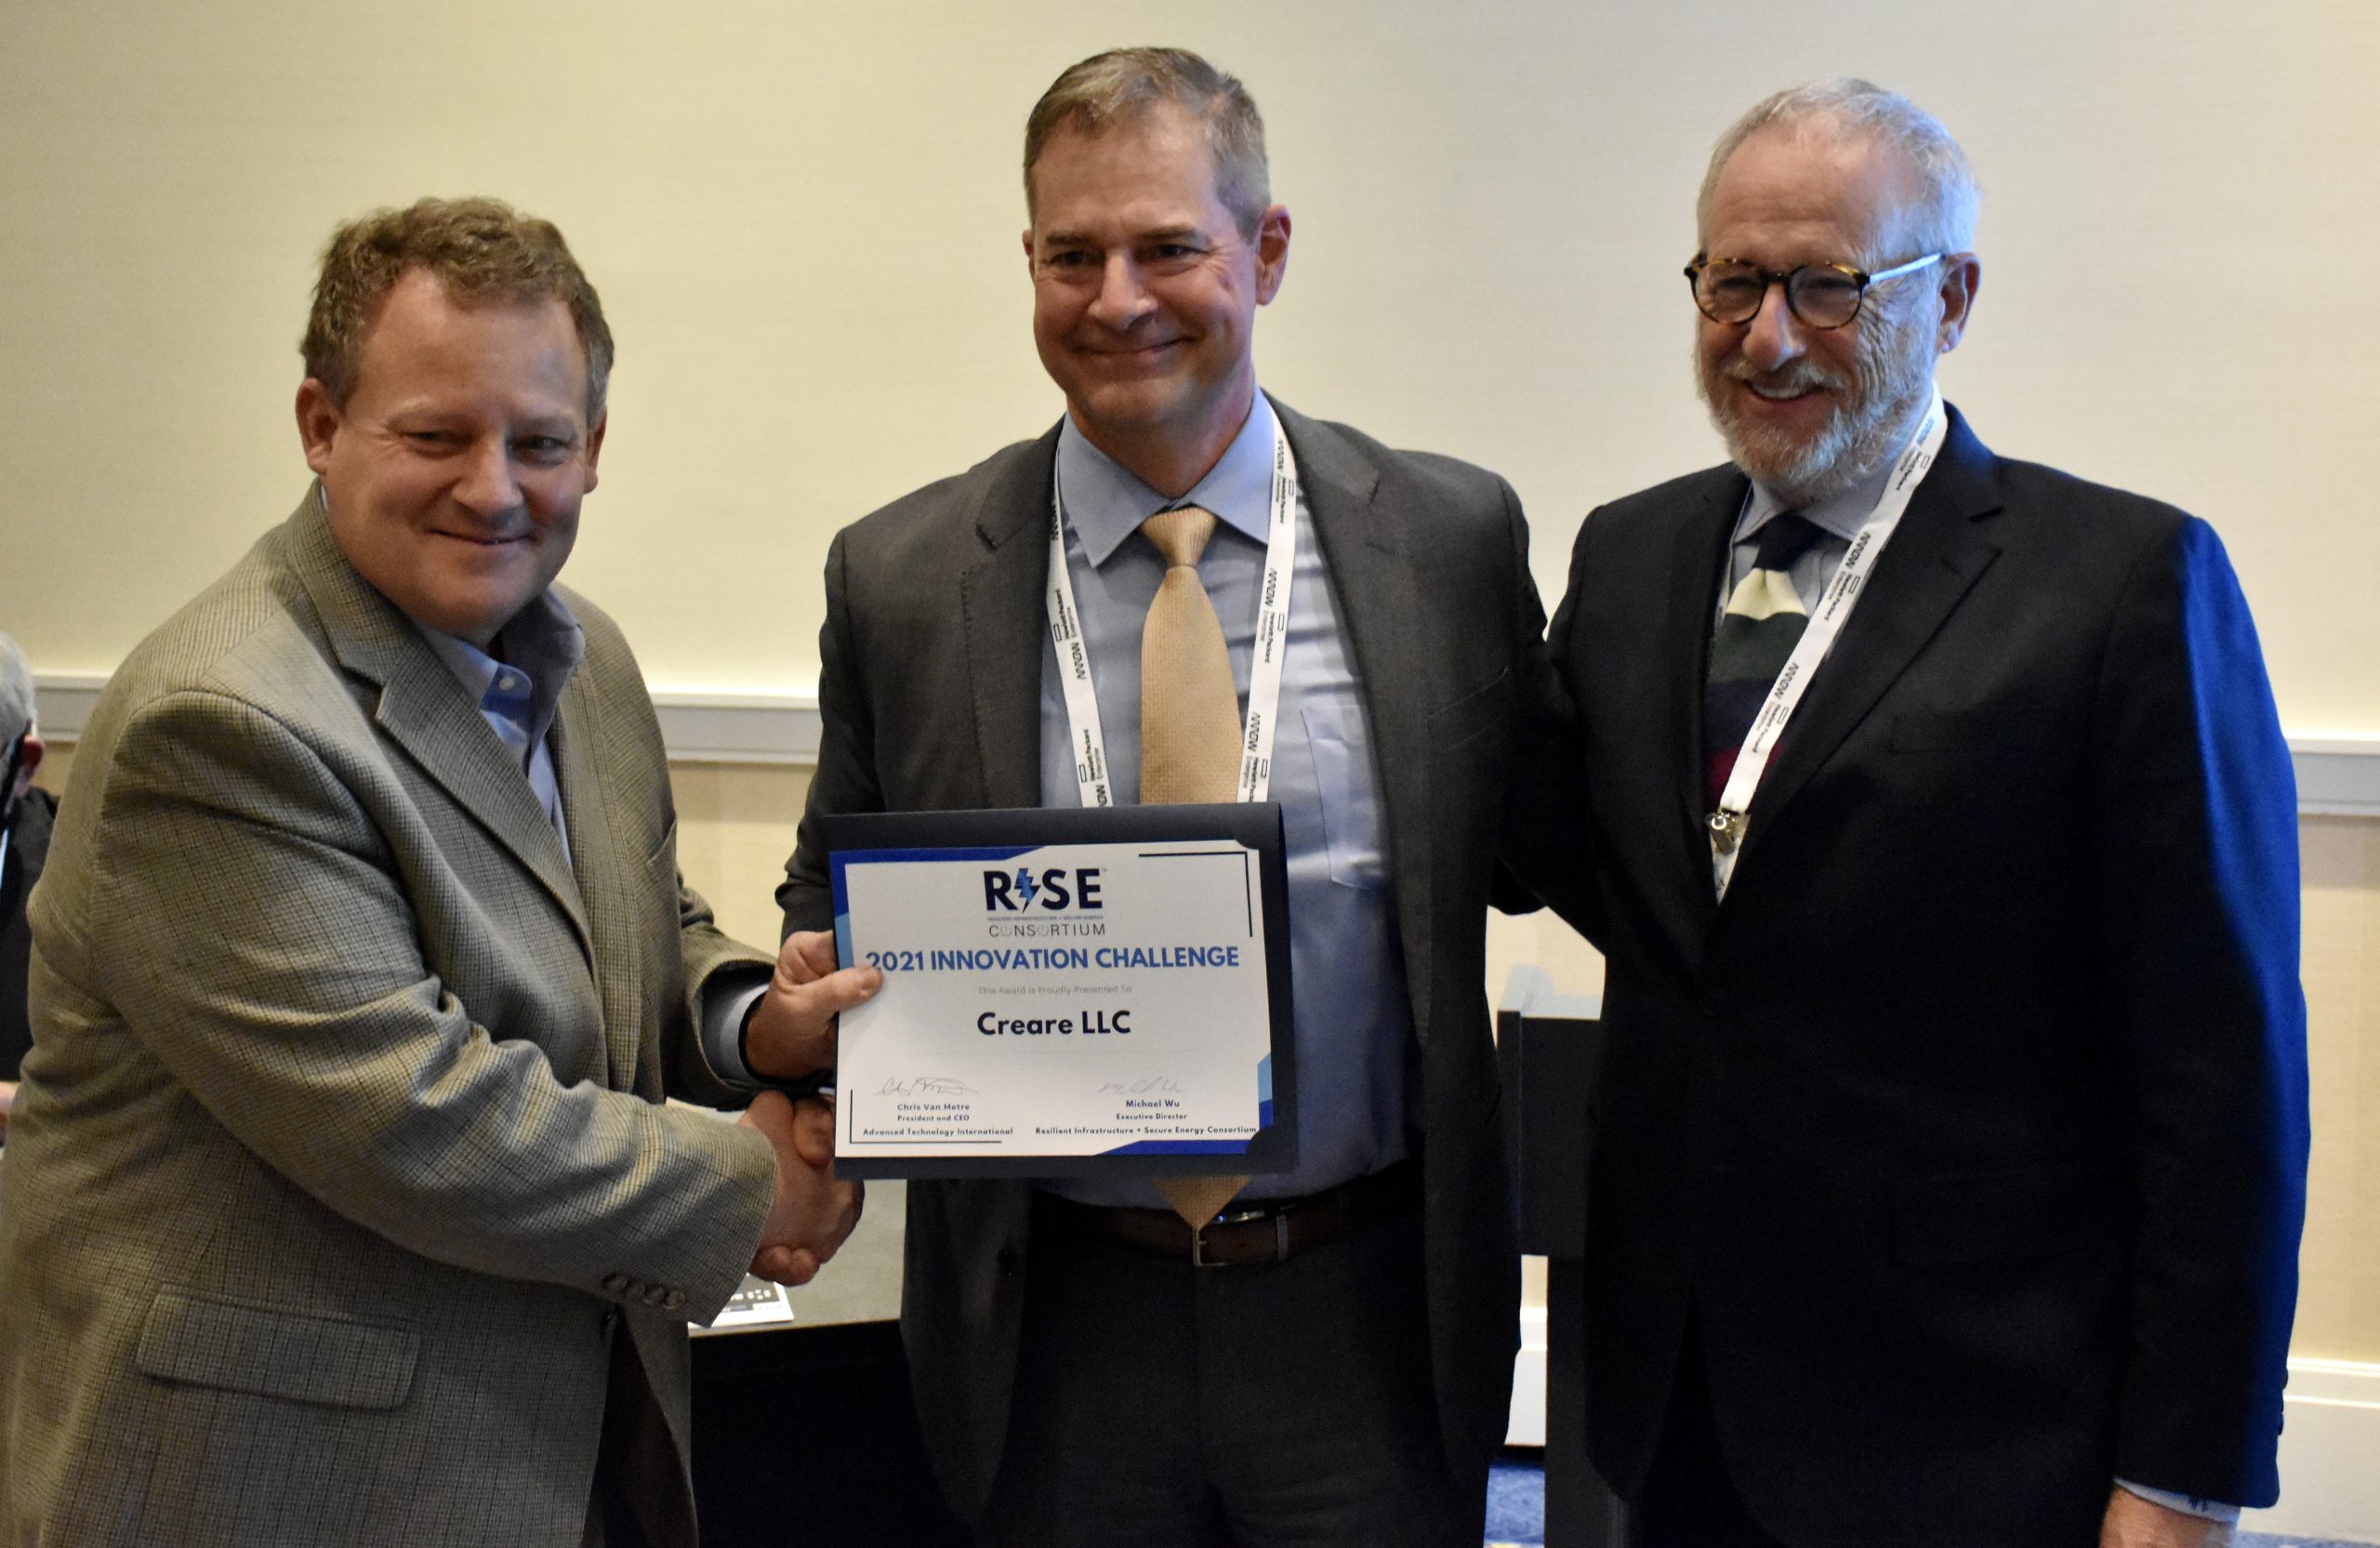 Chris Van Metre (L), ATI President and CEO, awarded Creare LLC reps photo